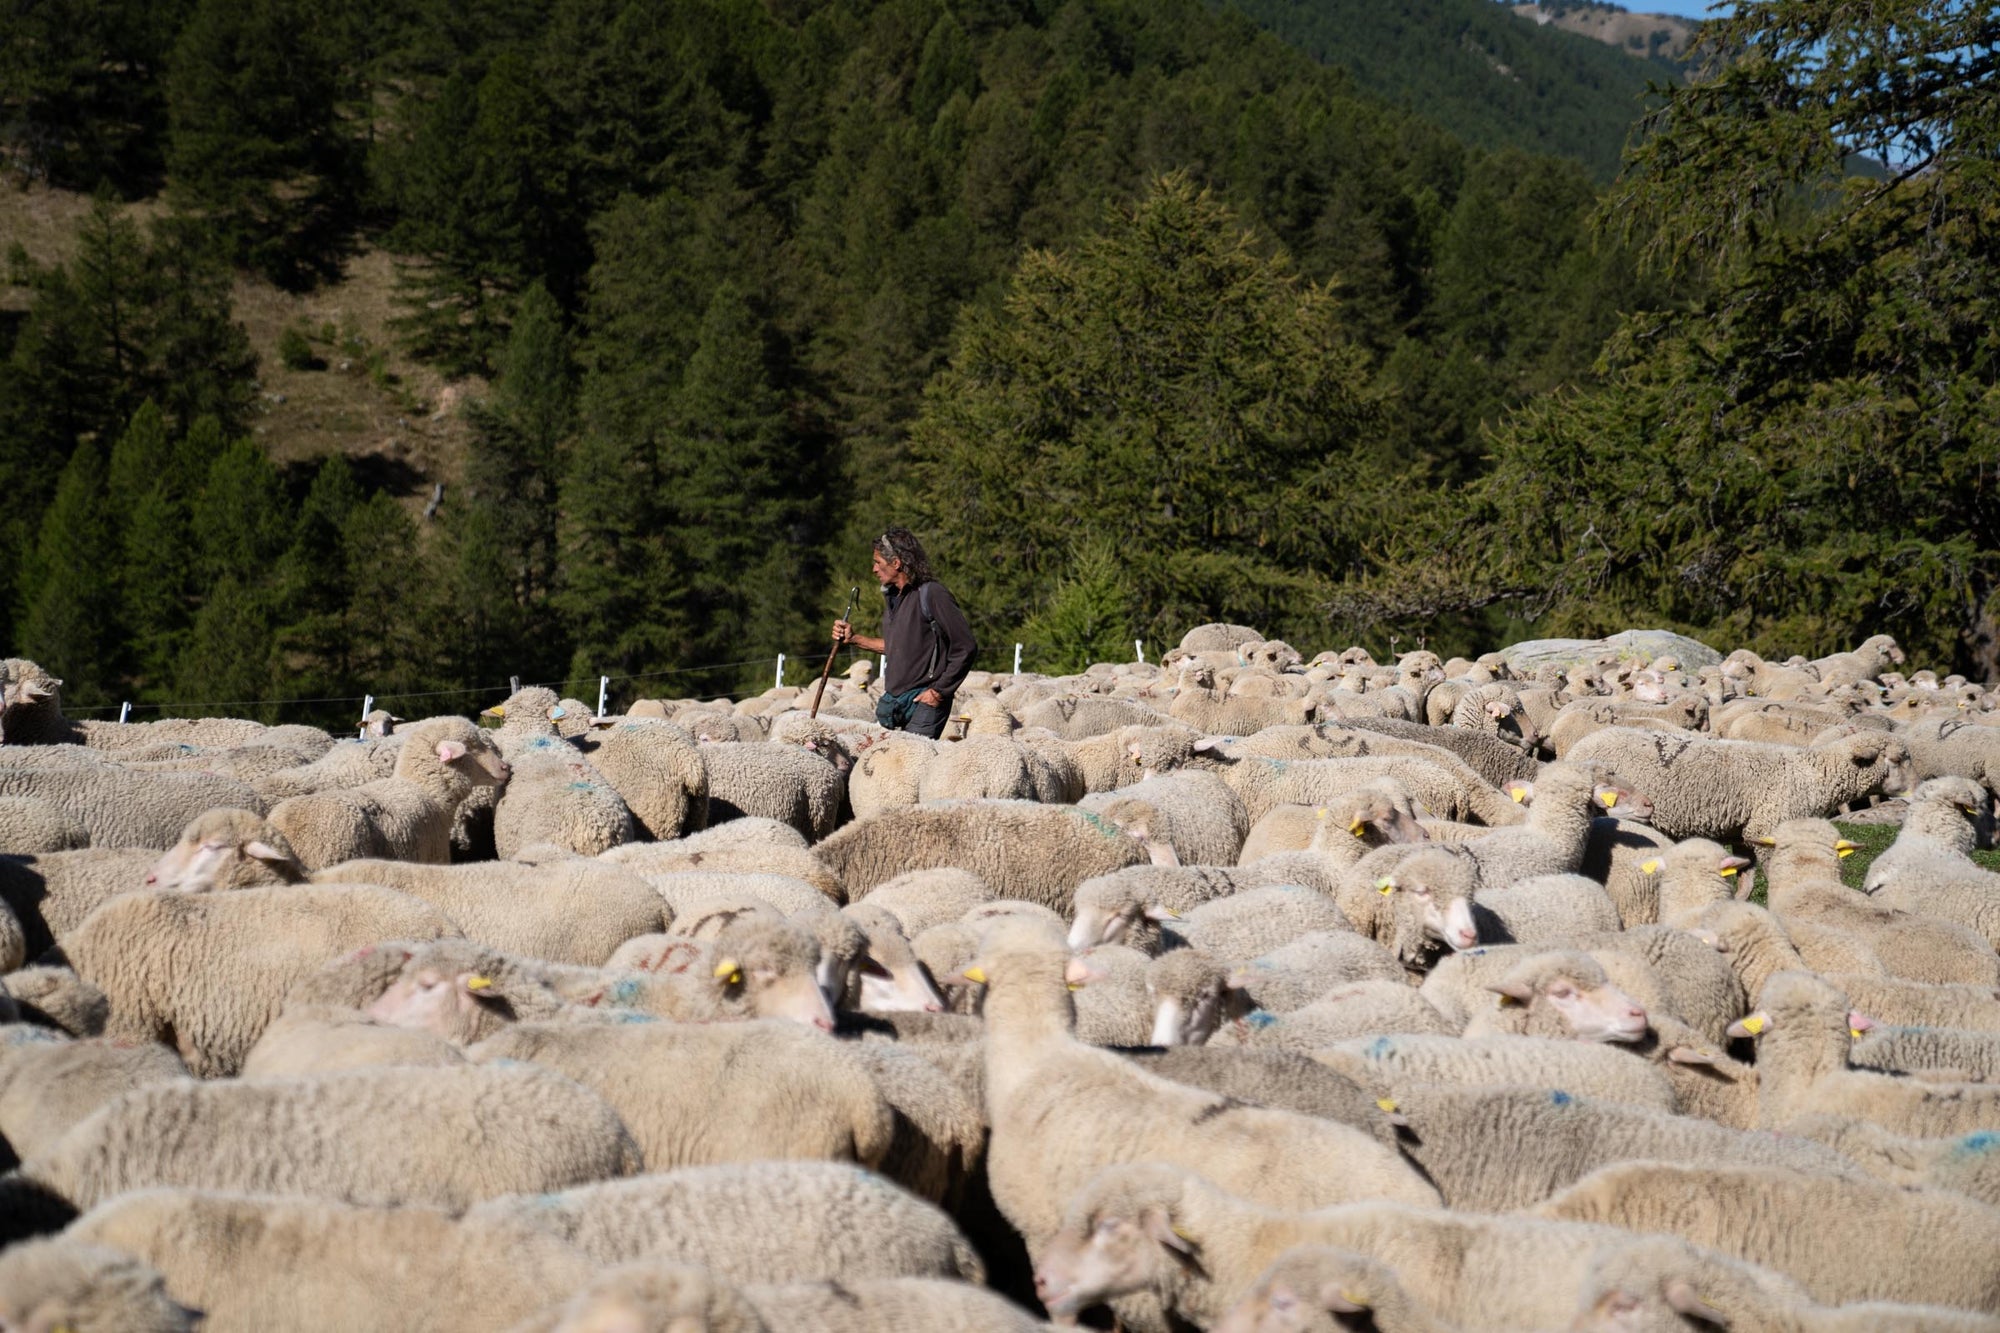 A shepherd showcasing good husbandry by inspecting of his flock of Merino d'Arles sheep.